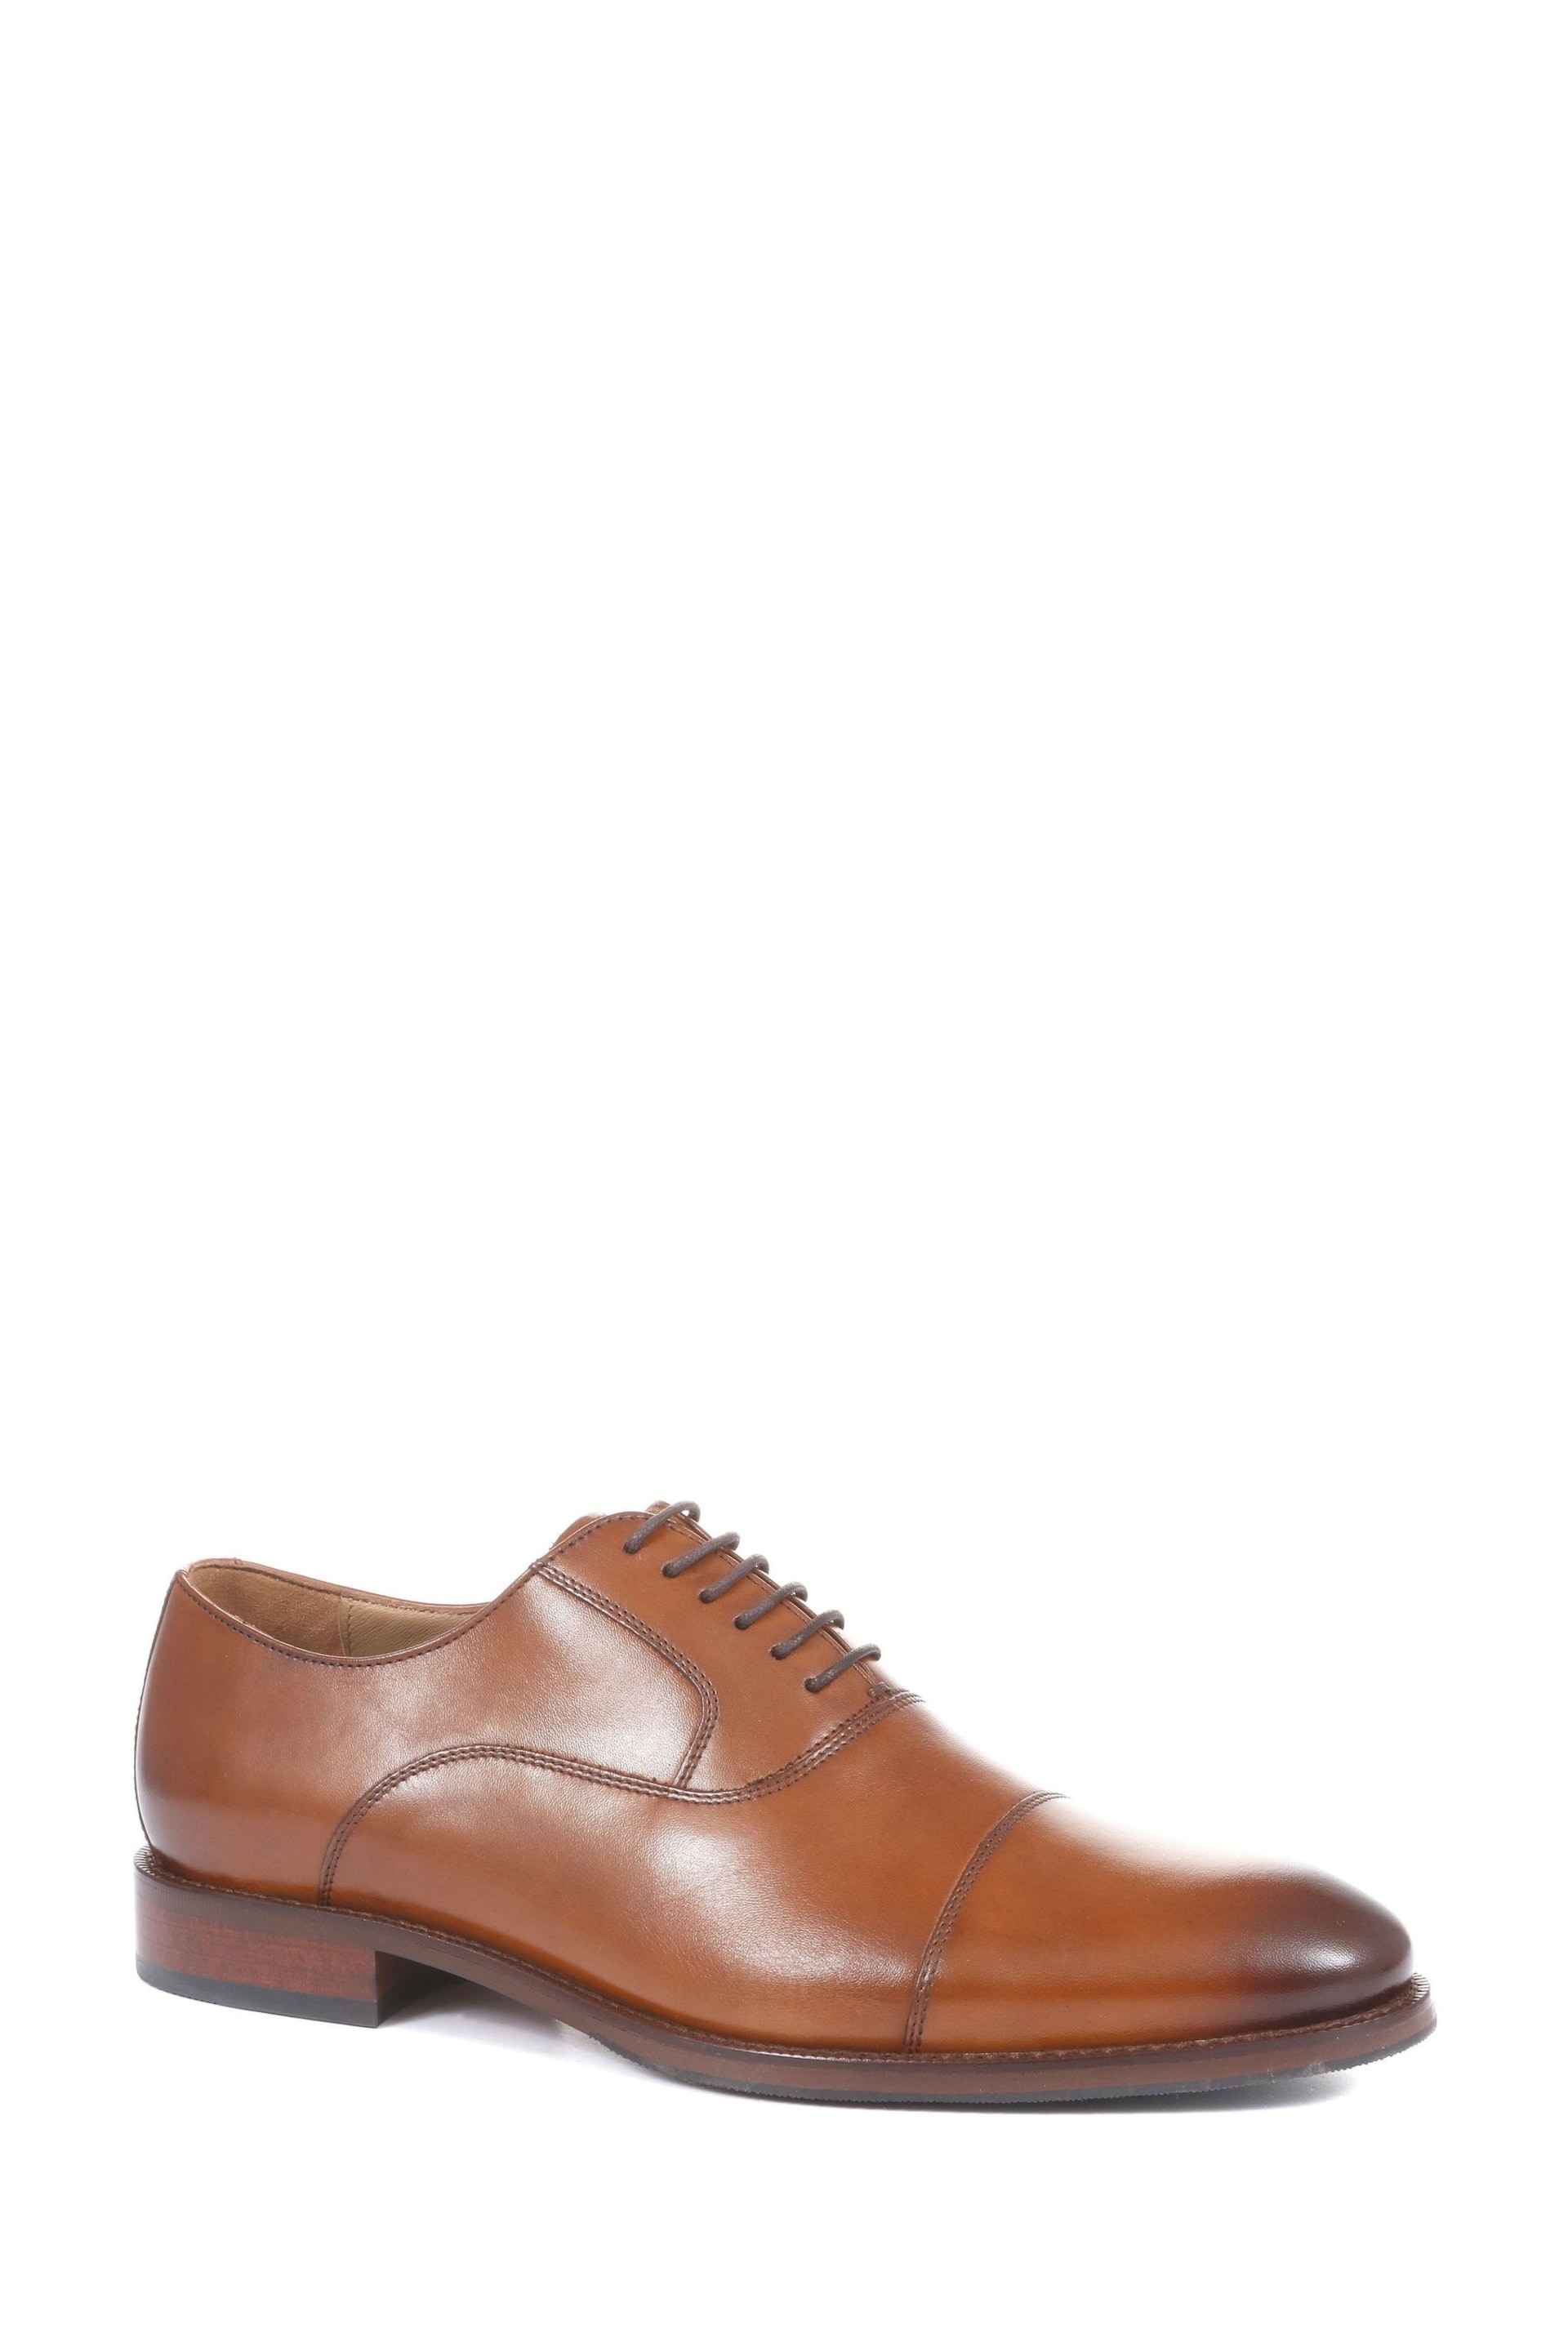 Jones Bootmaker Matthew Tan Leather Oxford Shoes - Image 4 of 5